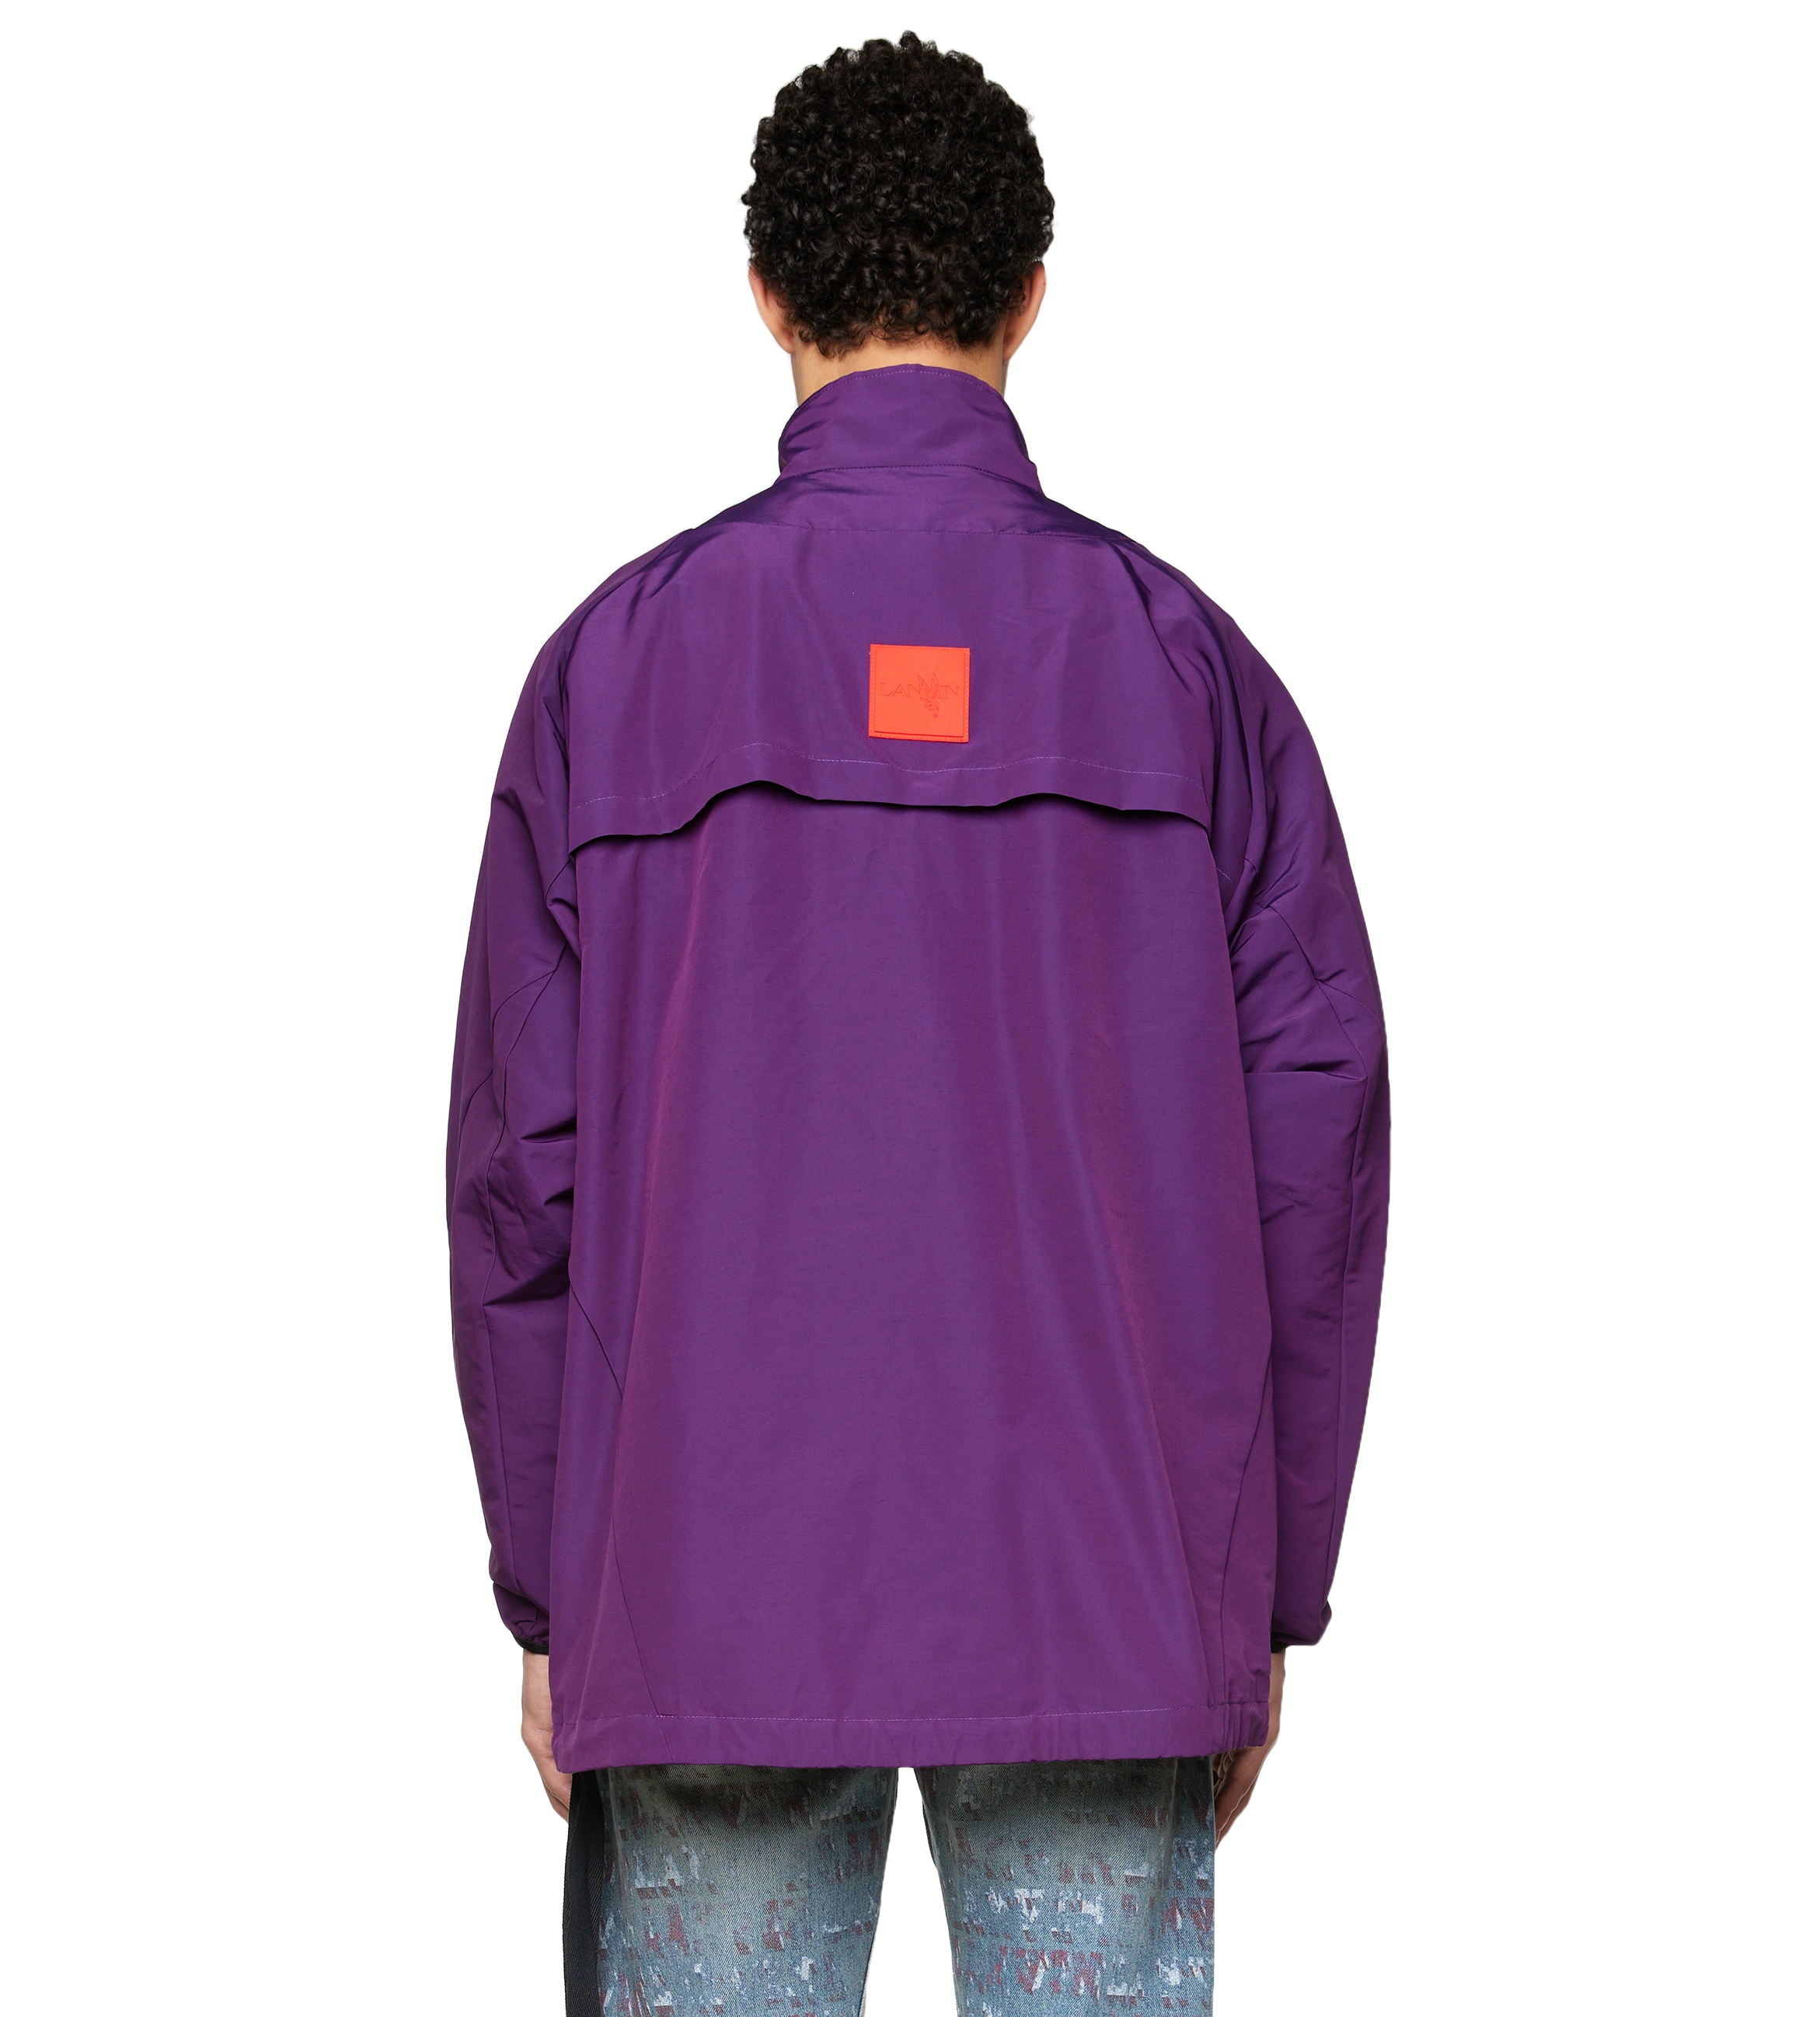 Lanvin x Future Zipped Jacket Purple